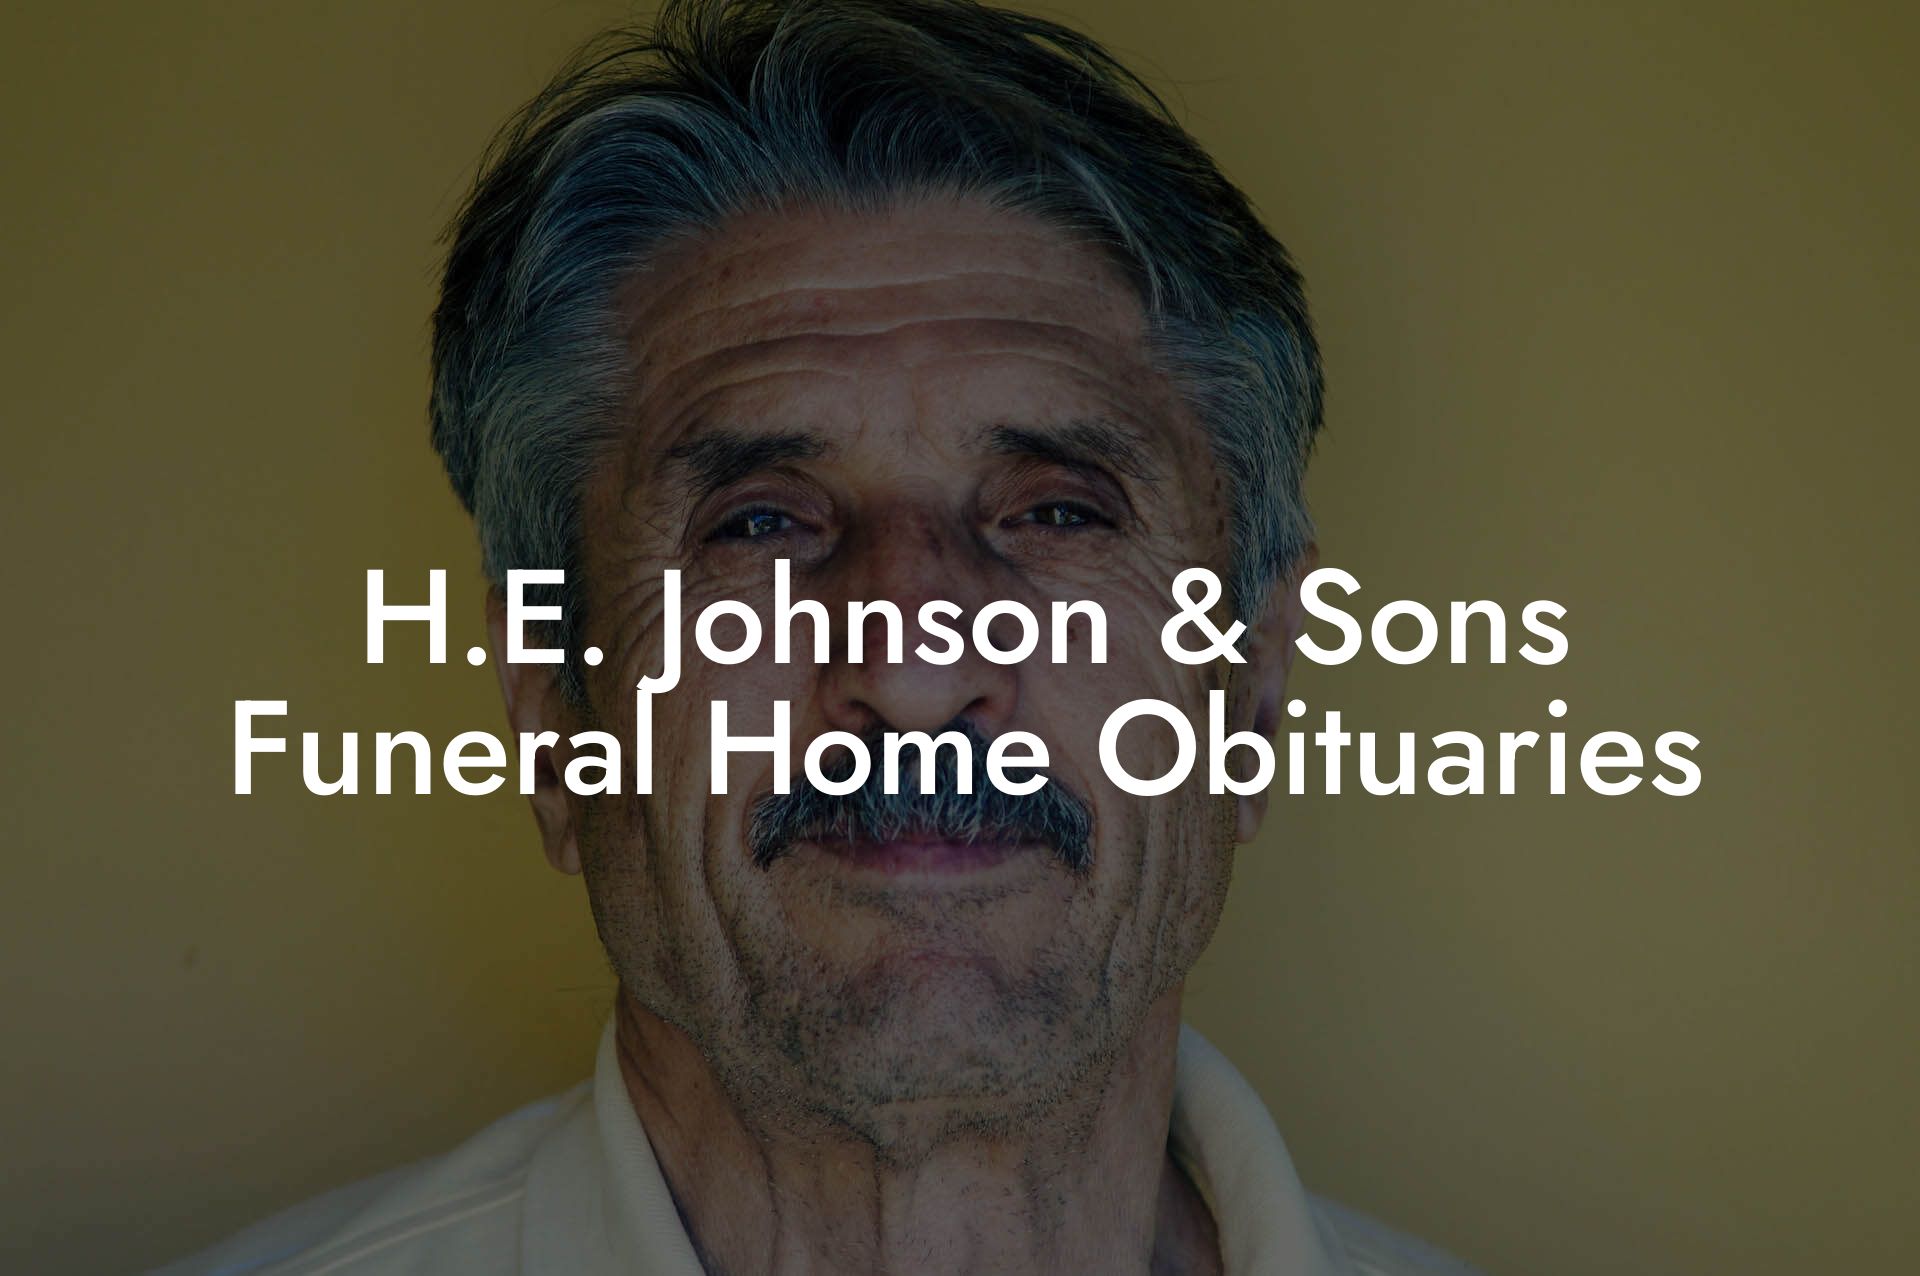 H.E. Johnson & Sons Funeral Home Obituaries